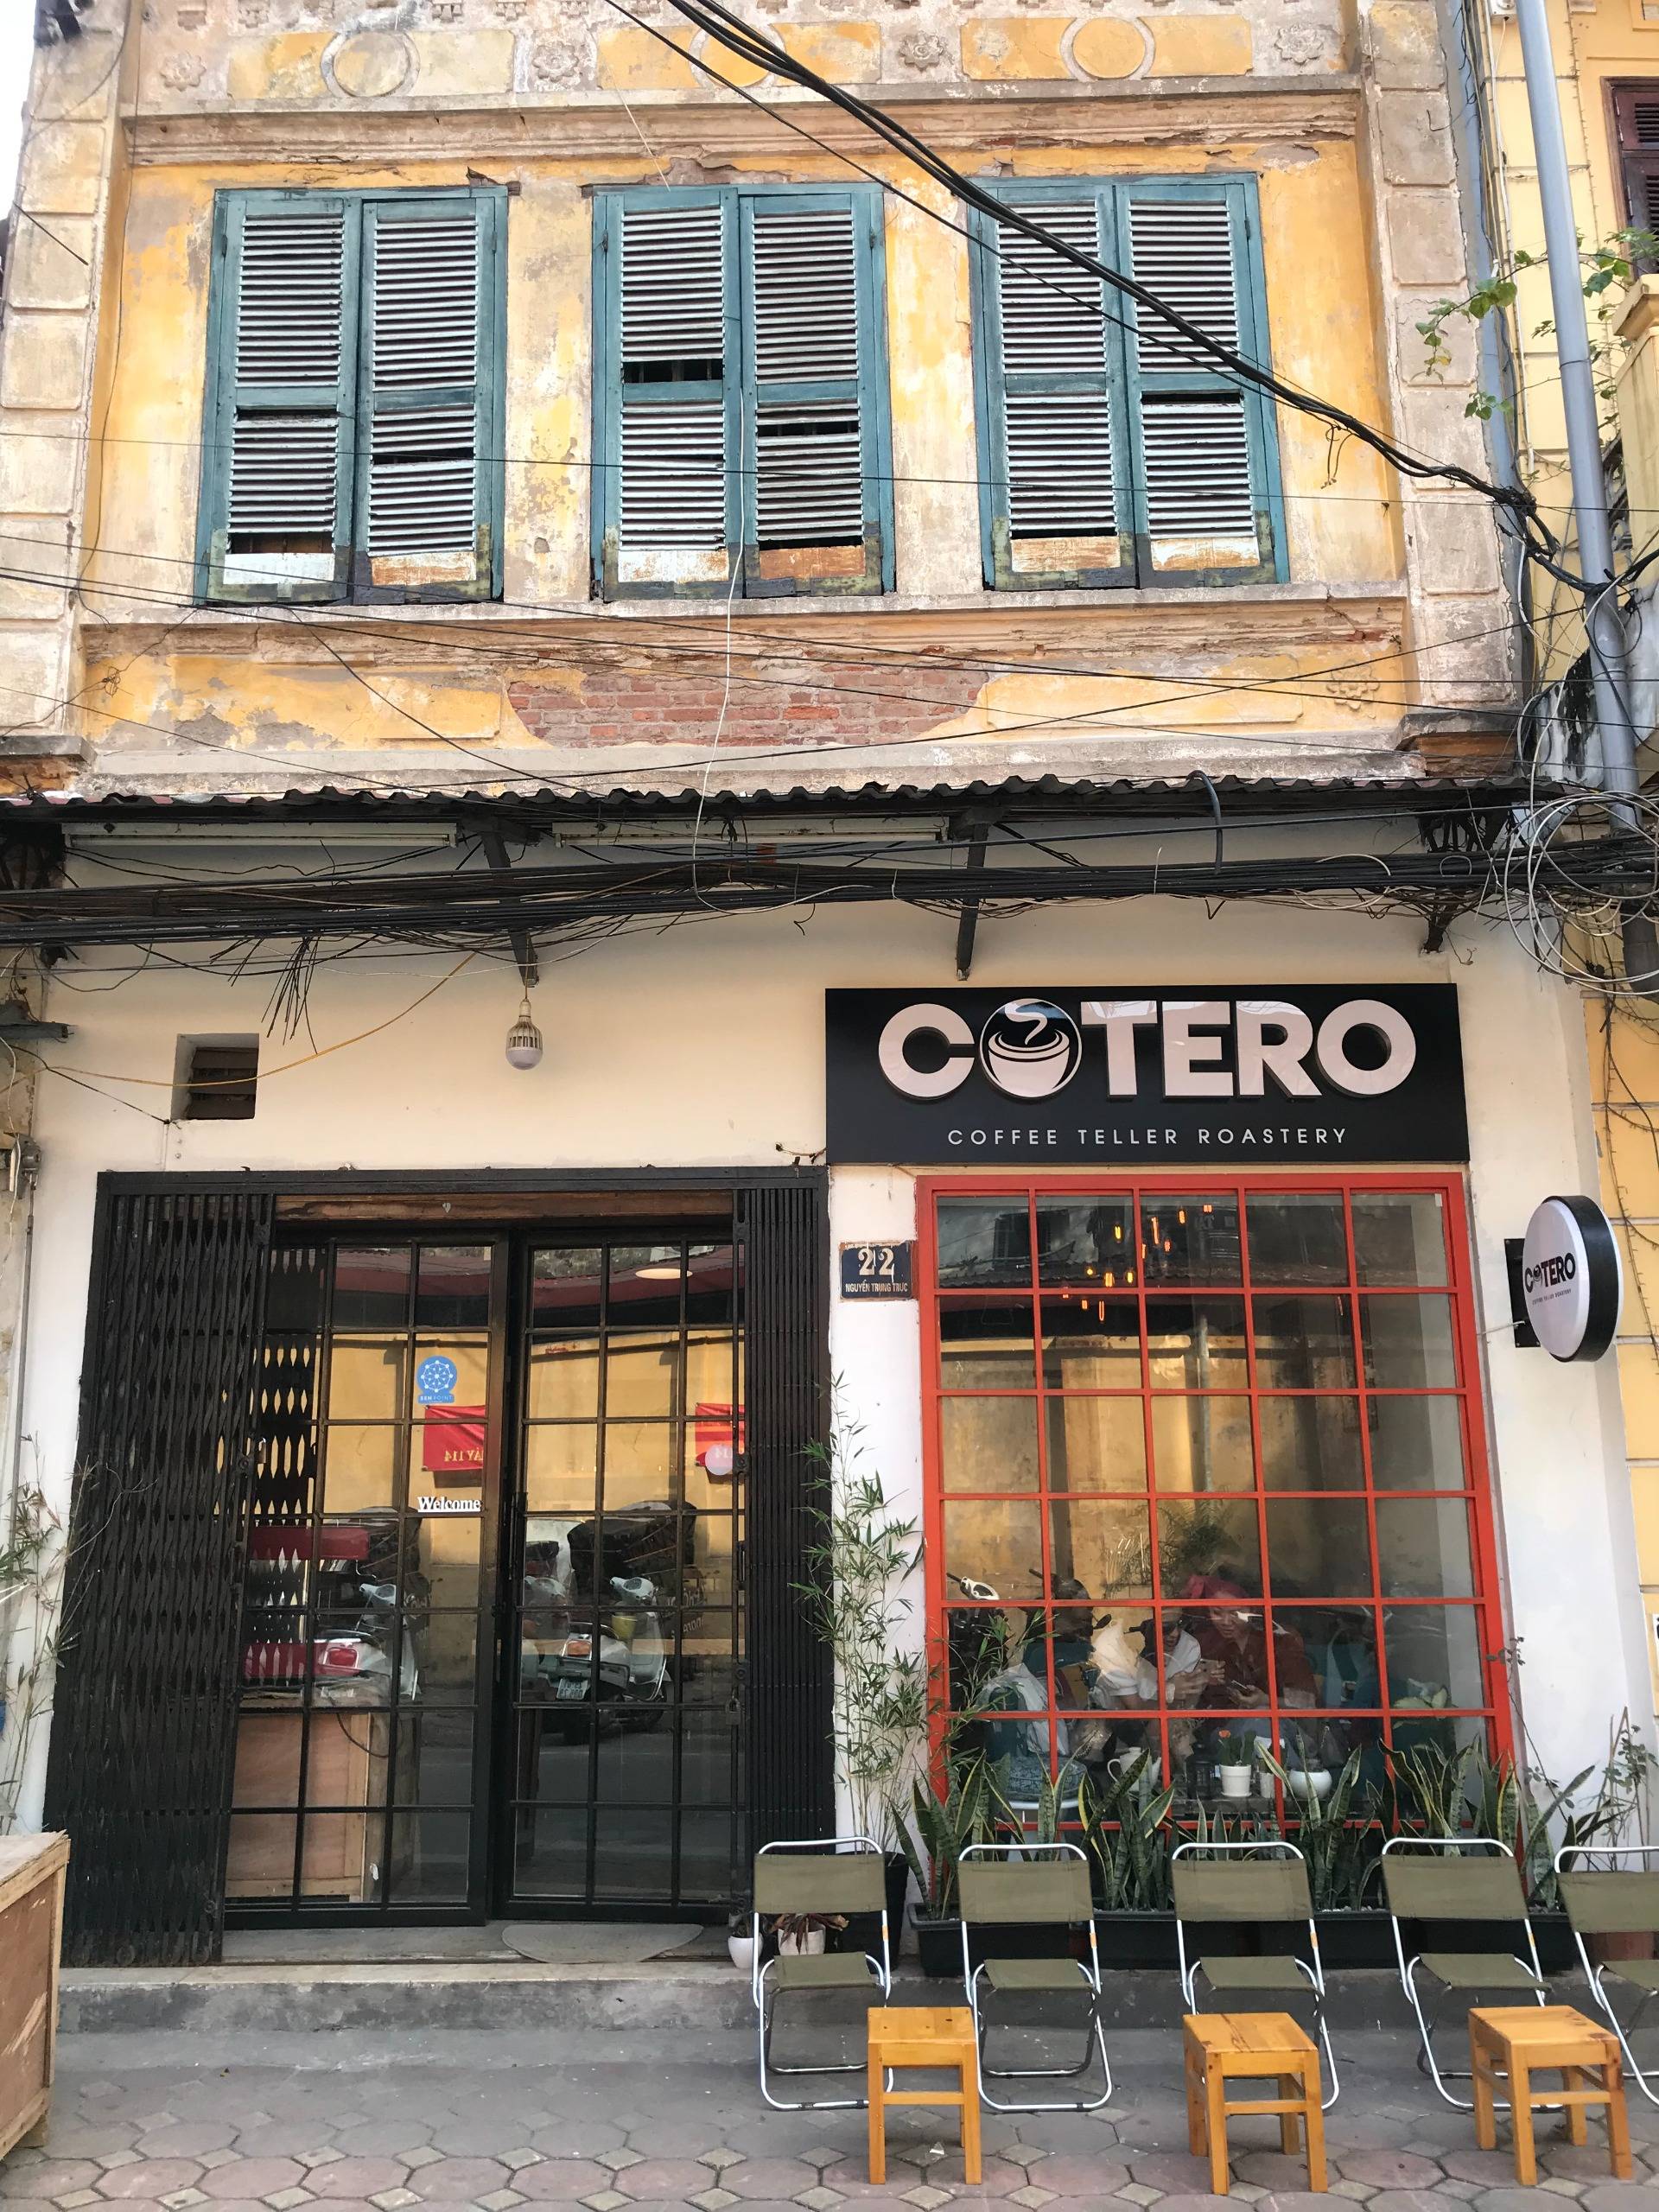 Enjoying Aeropress Coffee Process at Cotero Cafe , Vietnam